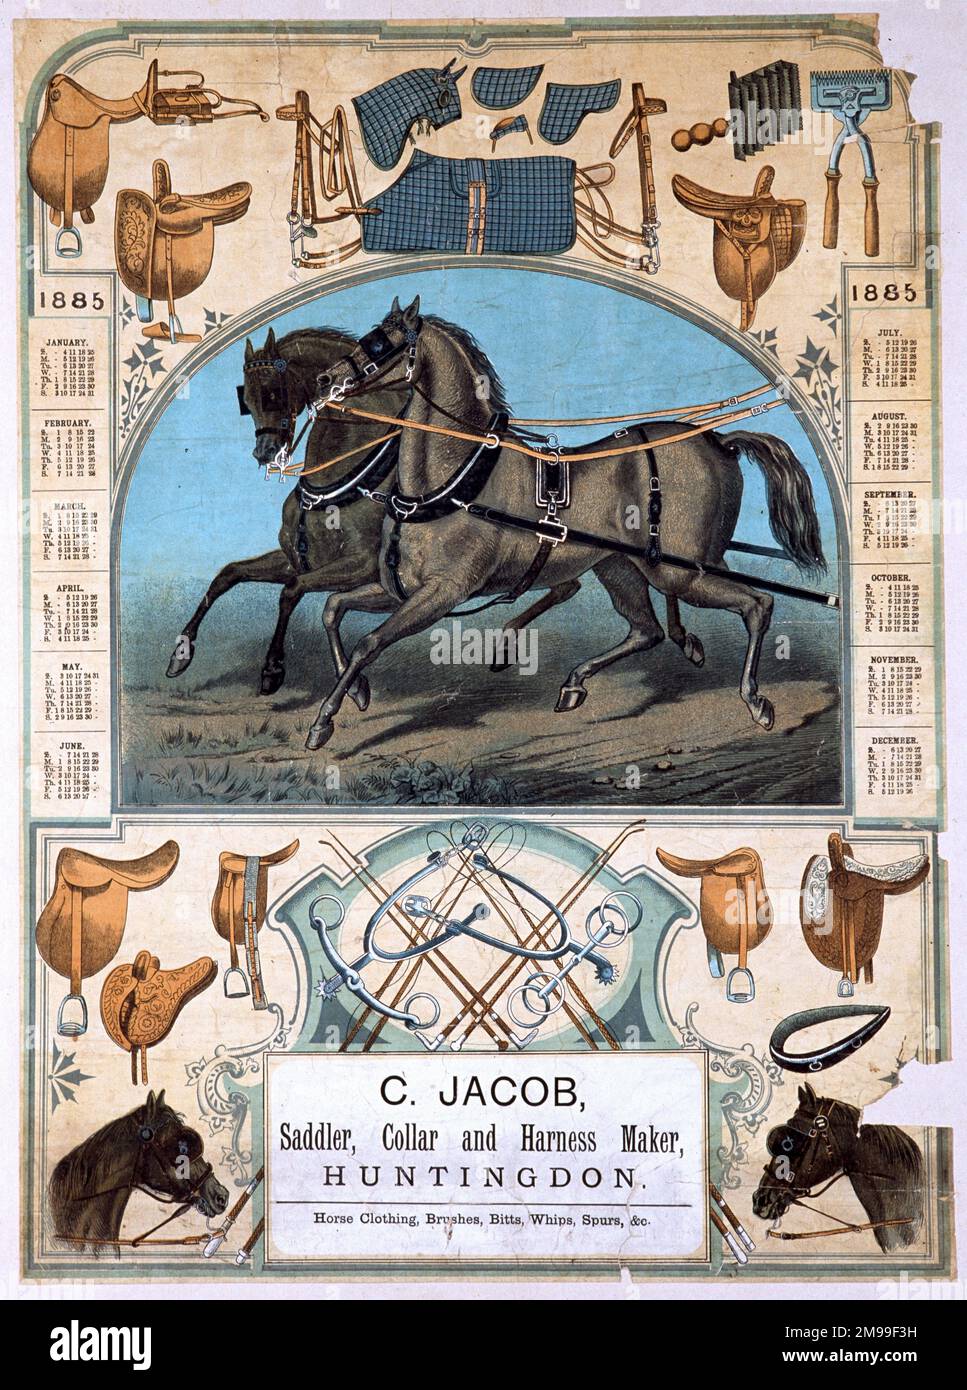 Calendar, C Jacob, Saddler, Collar and Harness Maker, Huntingdon. Stock Photo